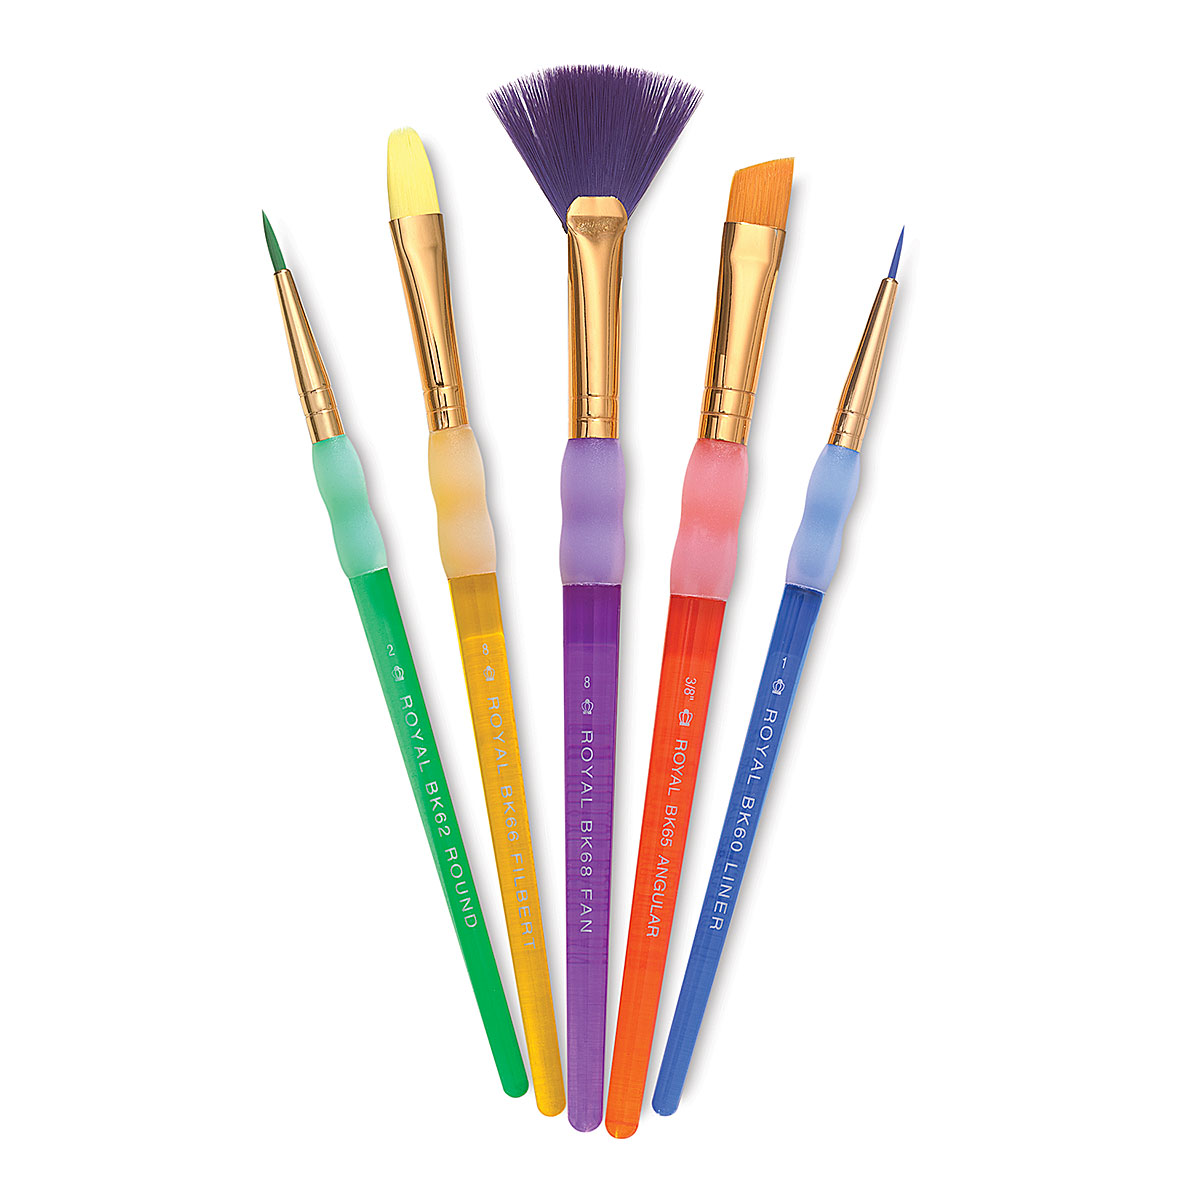 Glue Brushes Set of 12 Glitter Royal & Langnickel Big Kid's Choice Art Paint